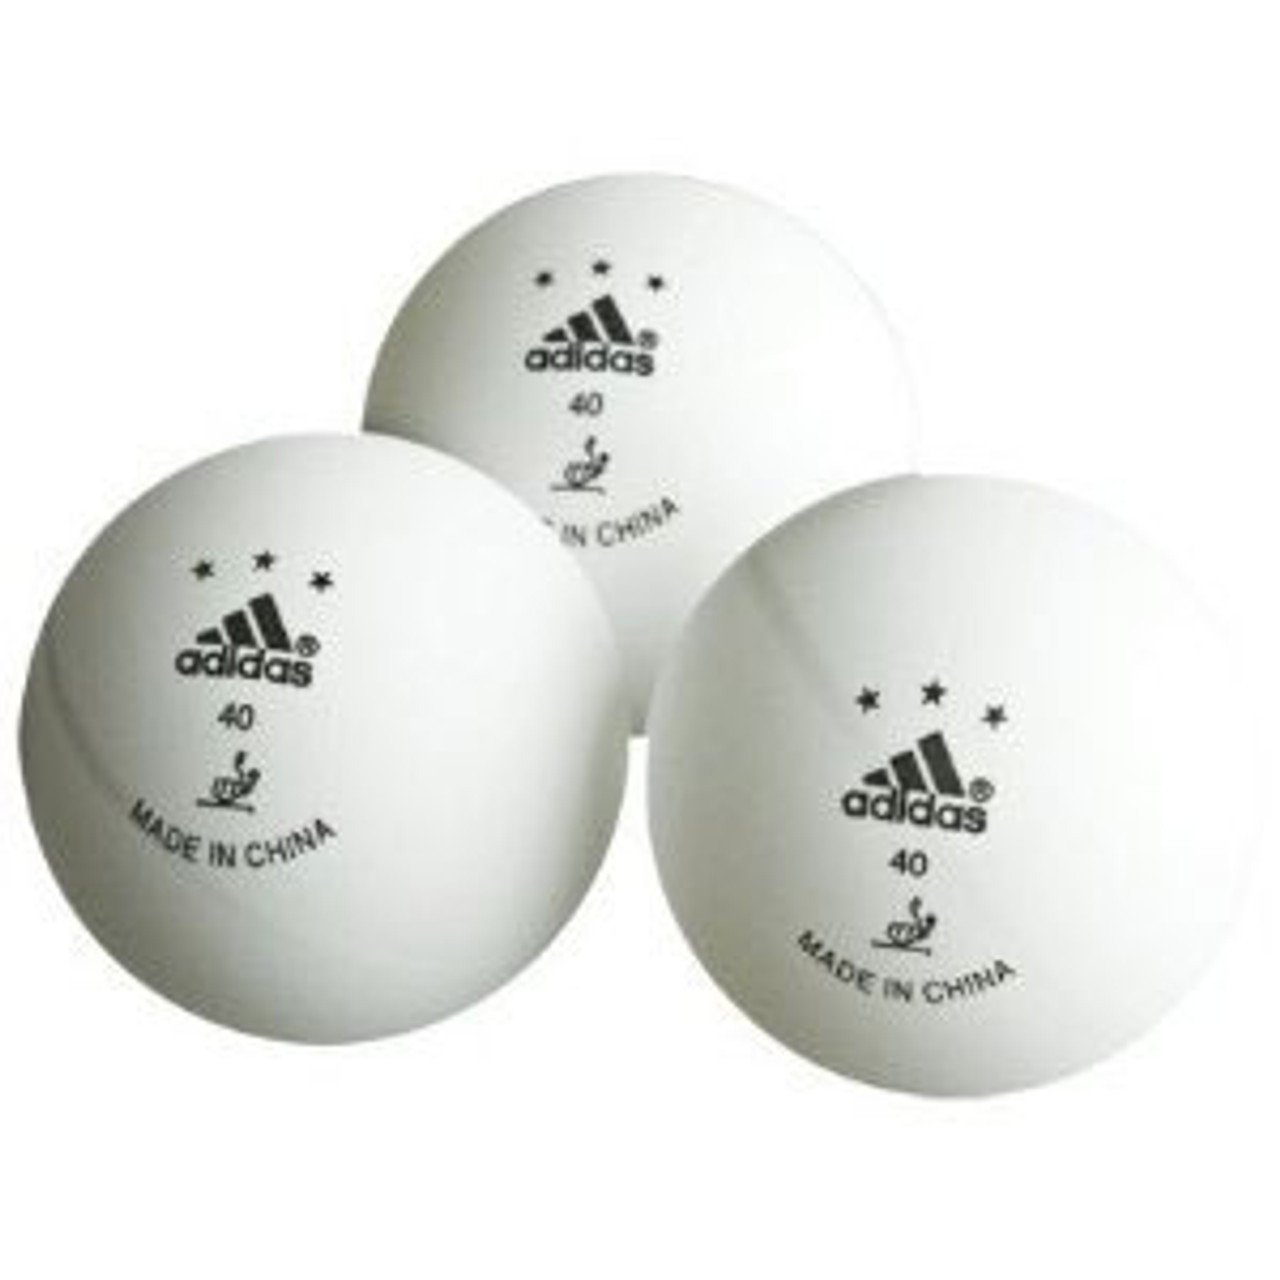 ventilador Tener cuidado ceja ADIDAS Competition Table Tennis Balls [pack of 3]